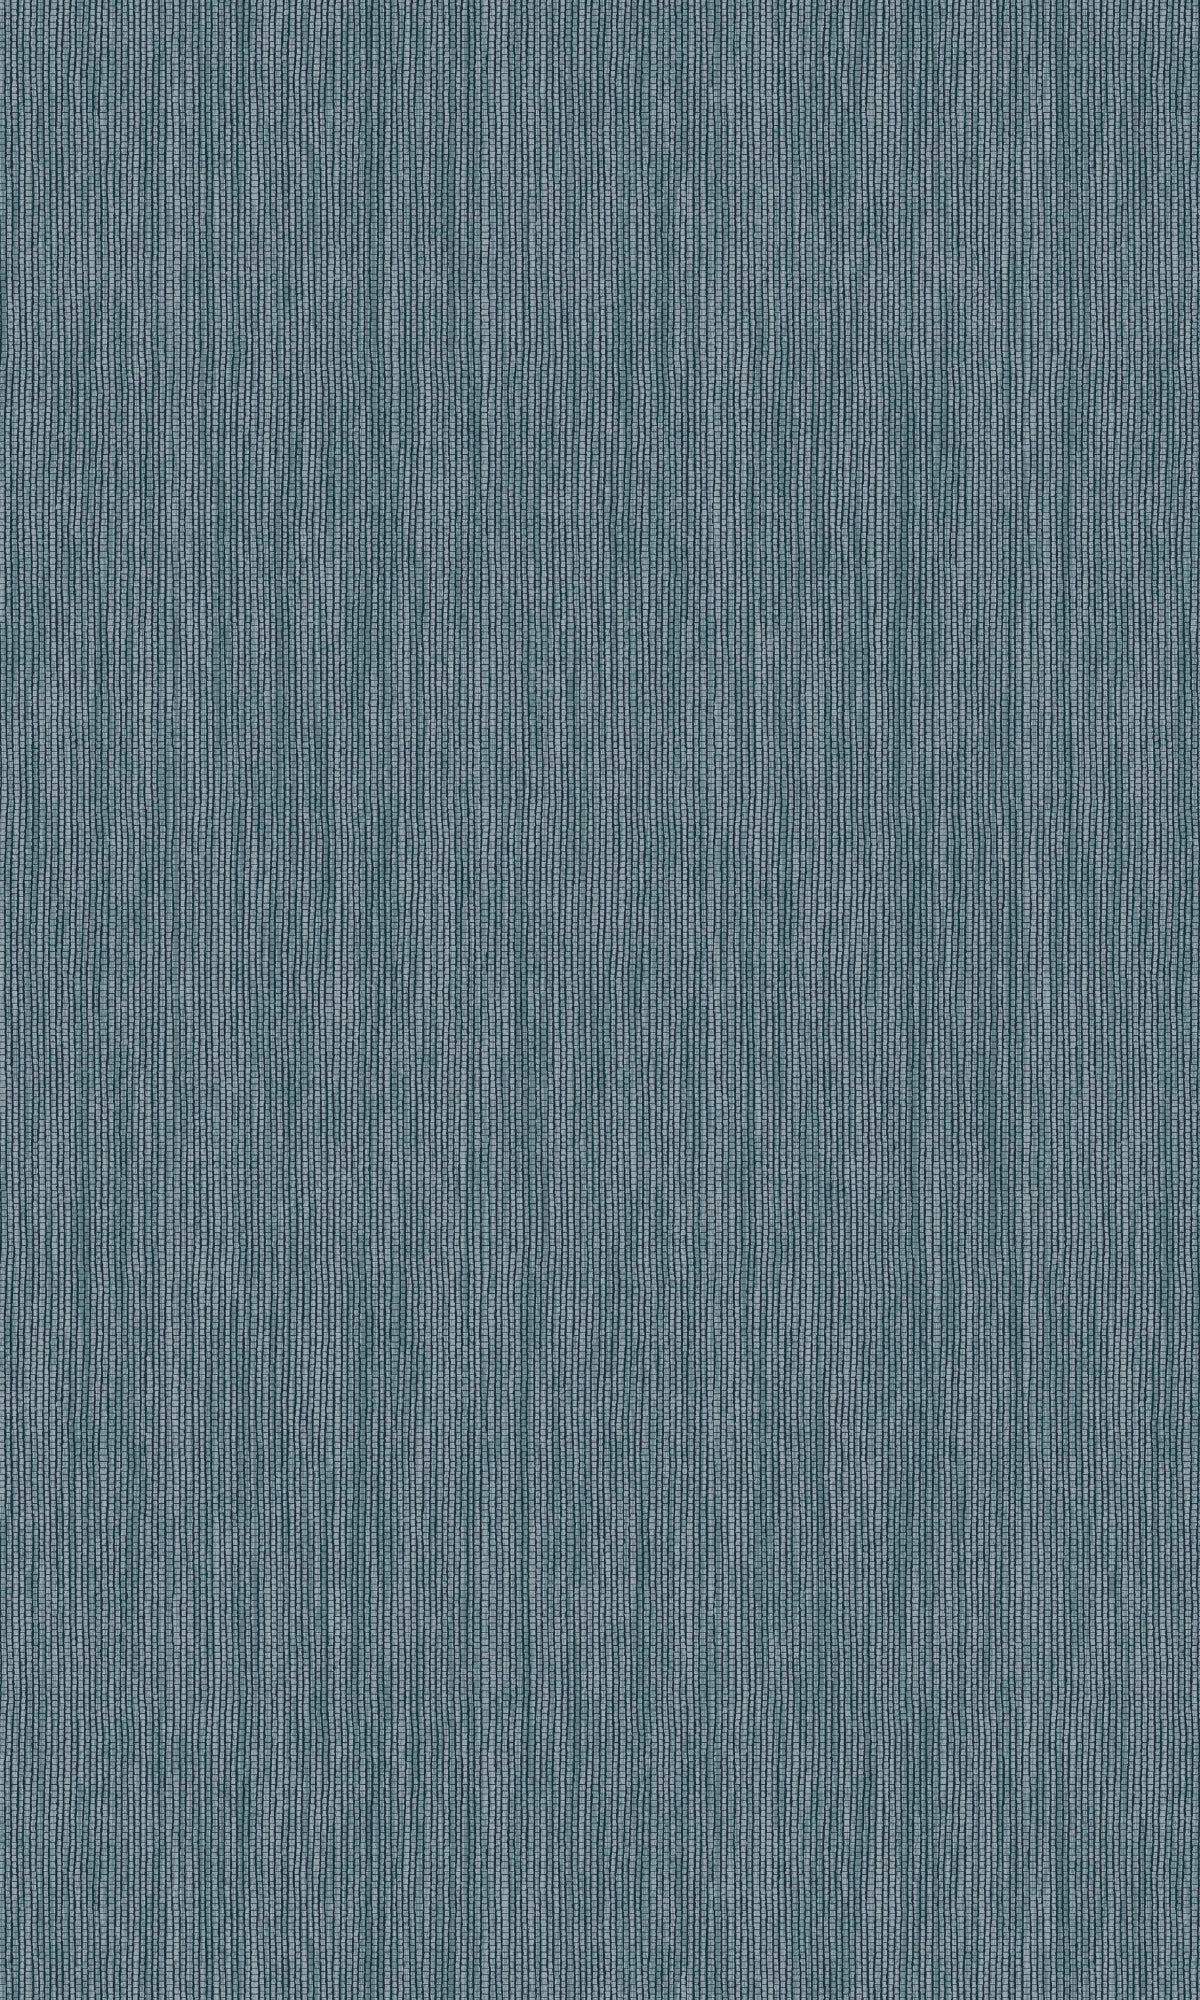 Blue Plain Textile Textured Wallpaper R9073